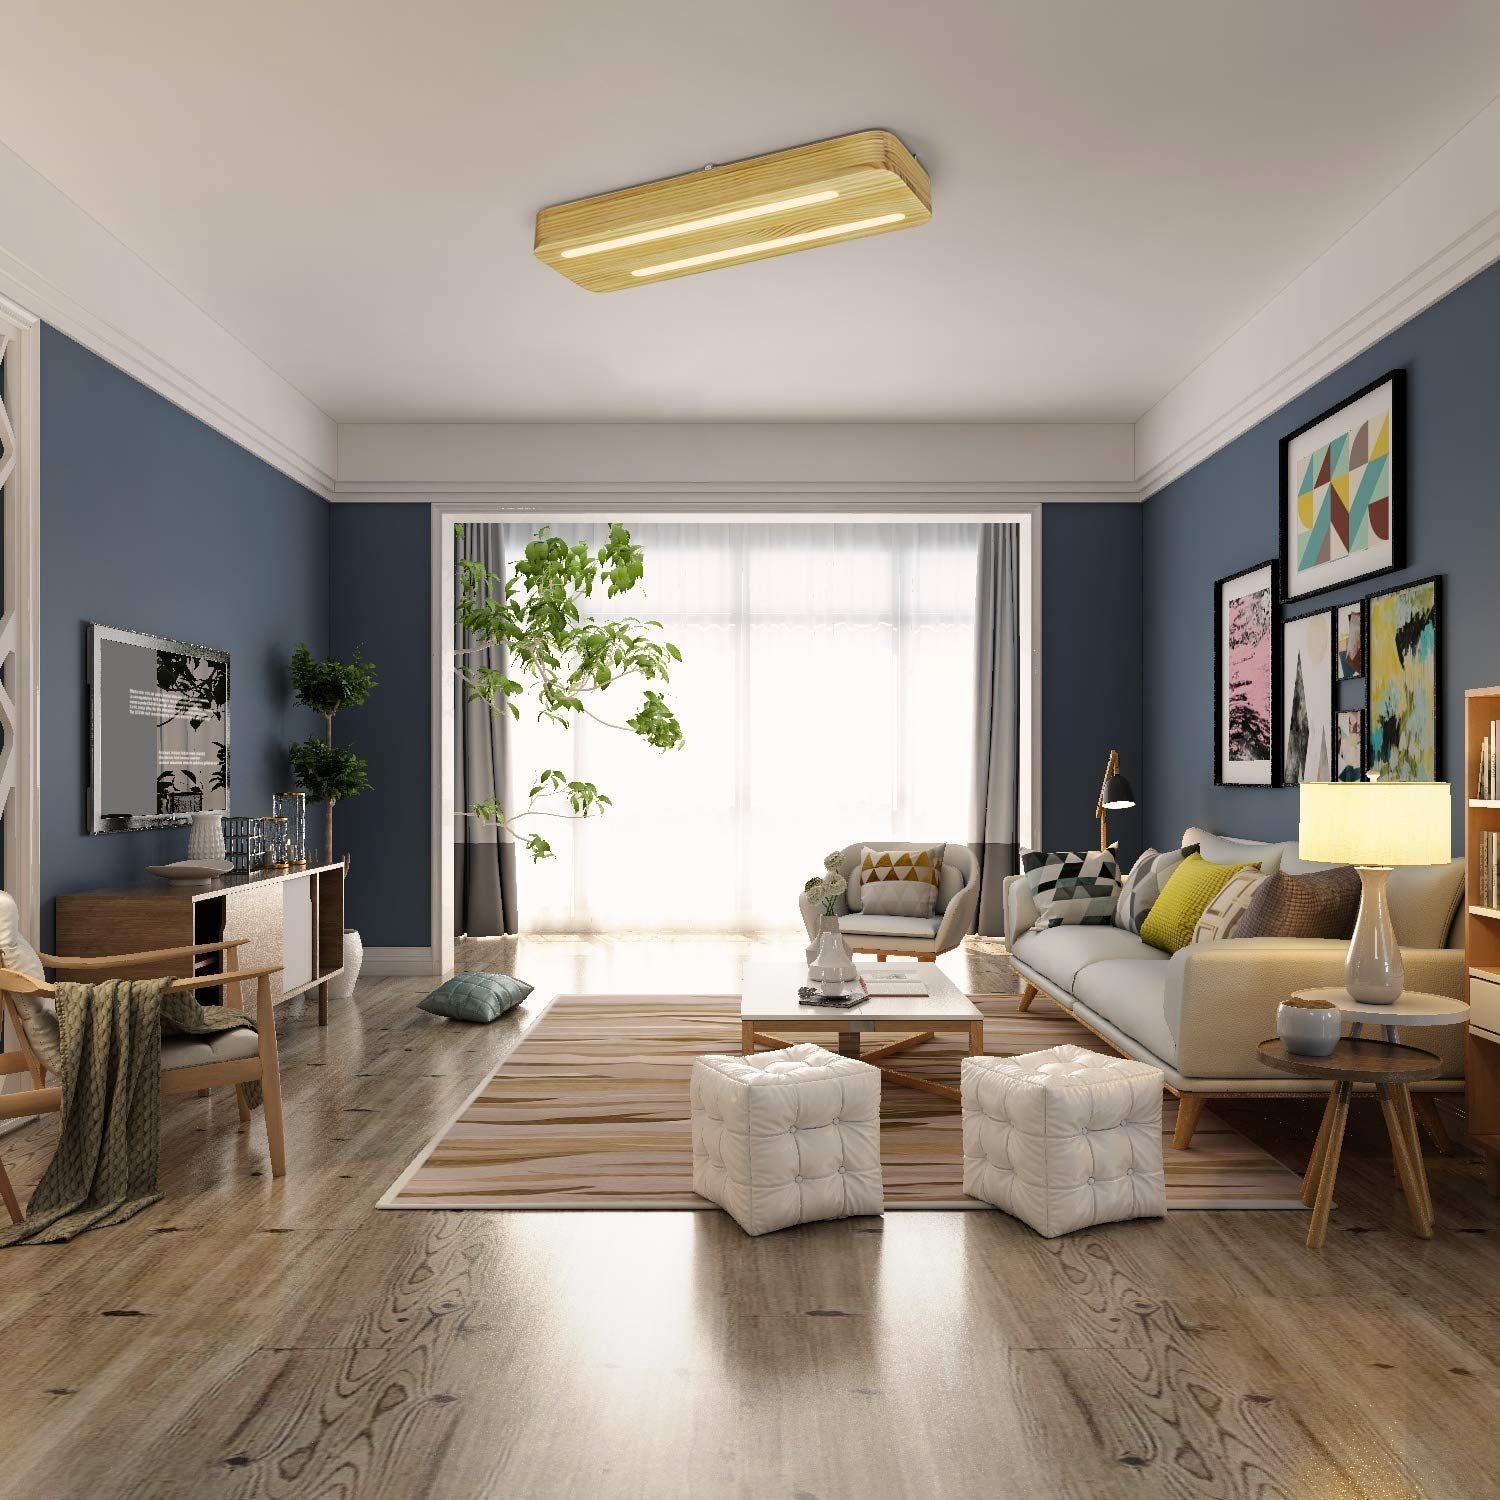 LED fest LED integriert Farbwechsel, Wohnzimmerlampe Flurlampe, Deckenleuchte Acryl Quadratisch Holz ZMH